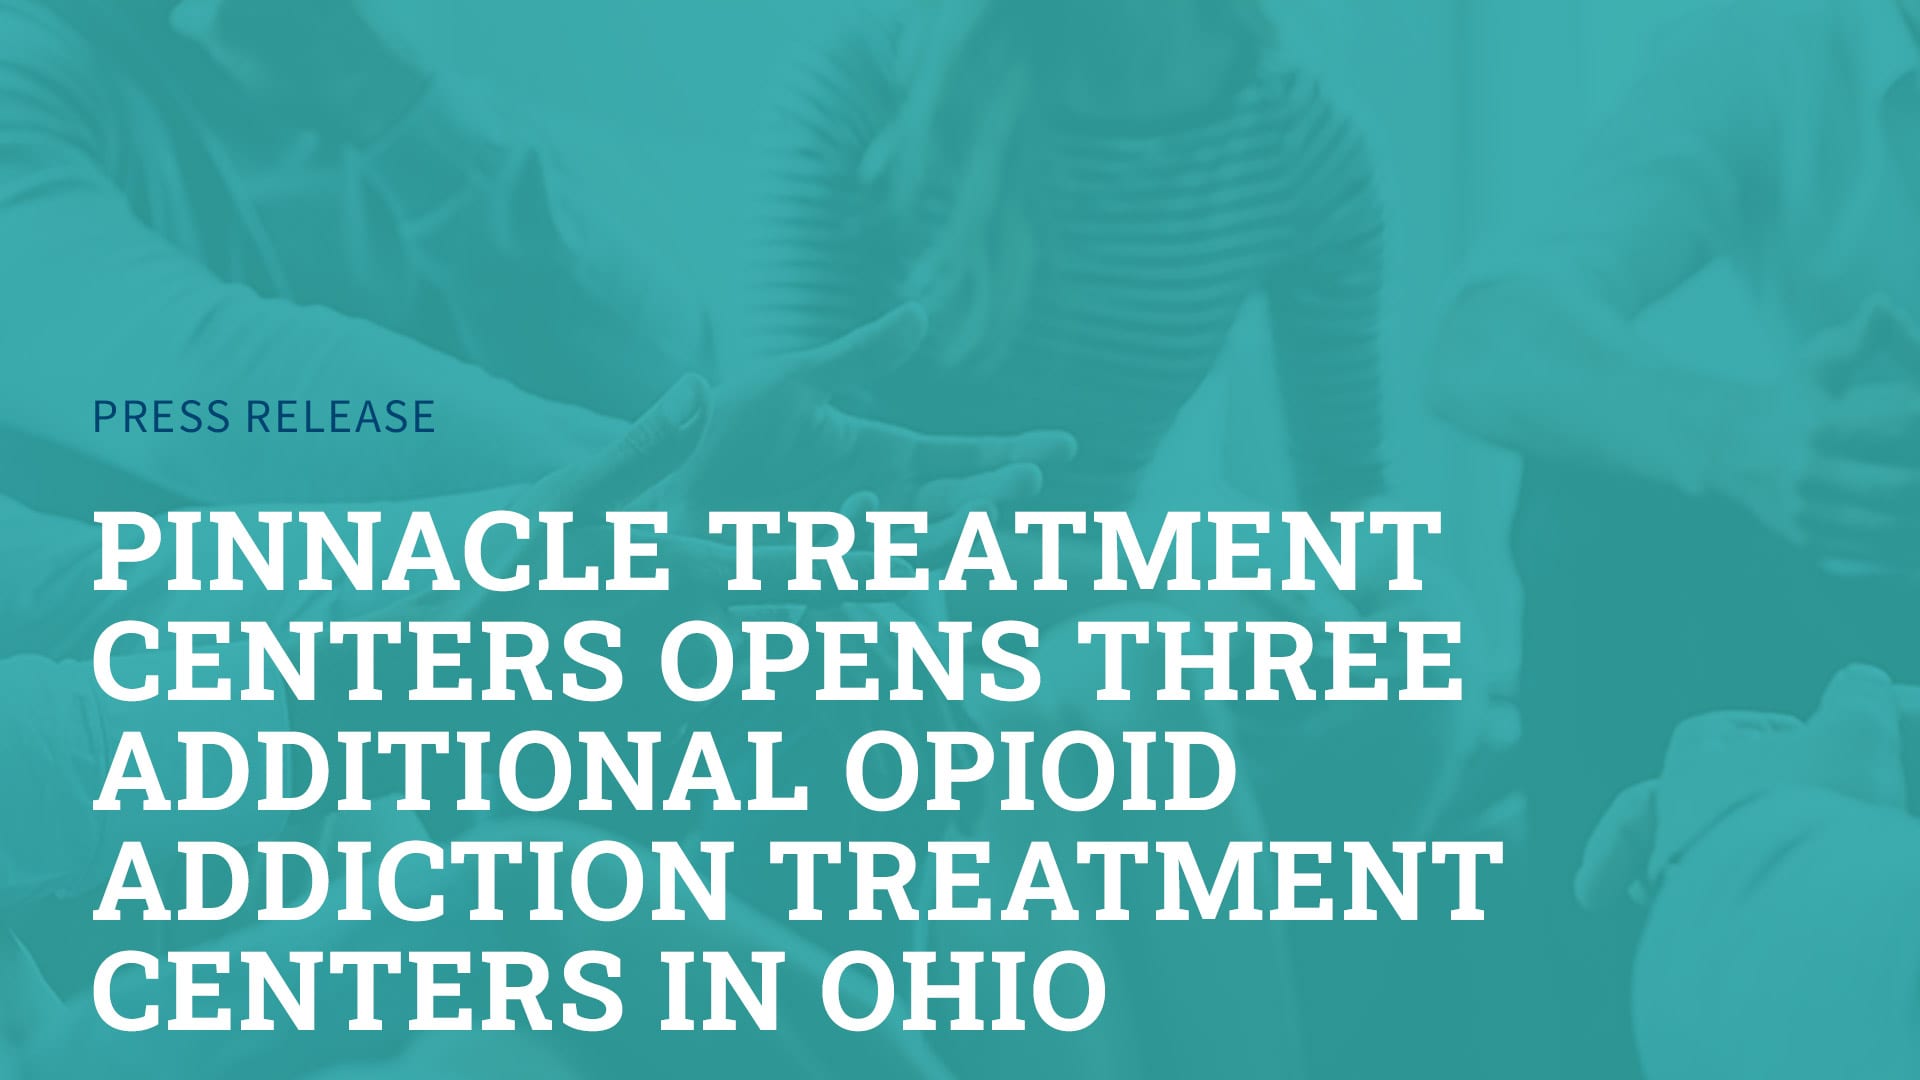 opens three additional opioid addiction treatment centers in ohio